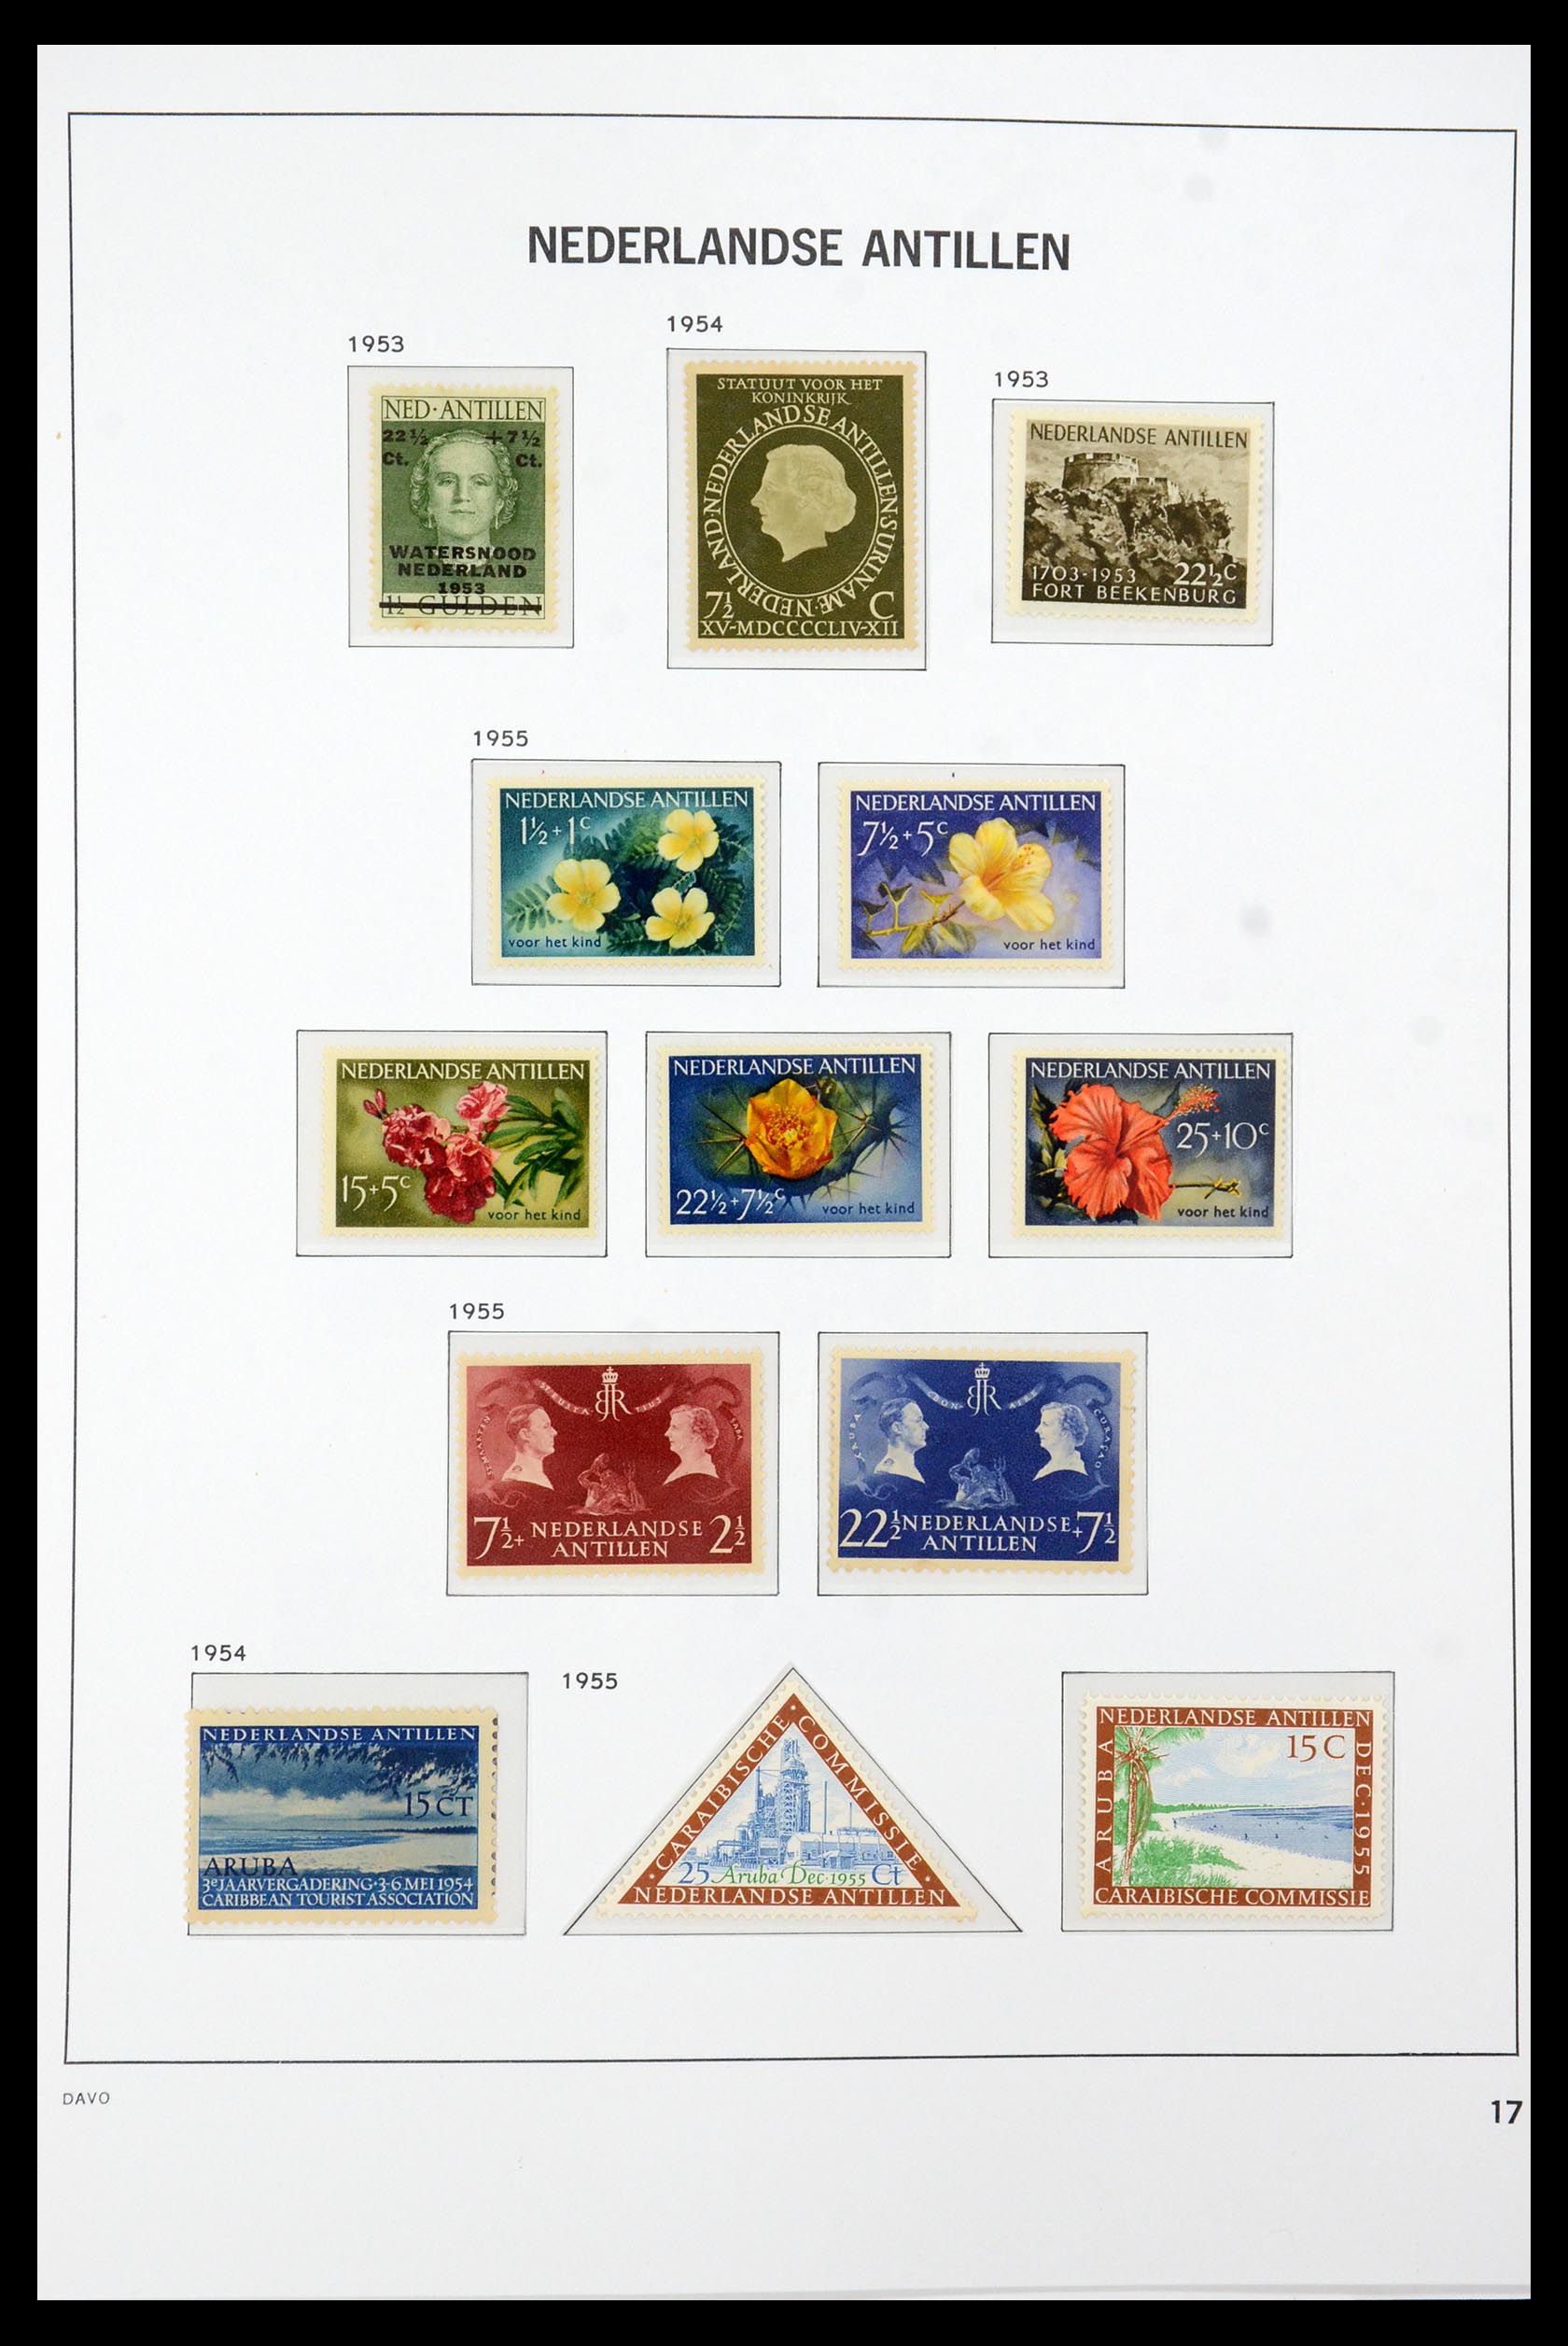 36393 004 - Stamp collection 36393 Netherlands Antilles 1949-2010.